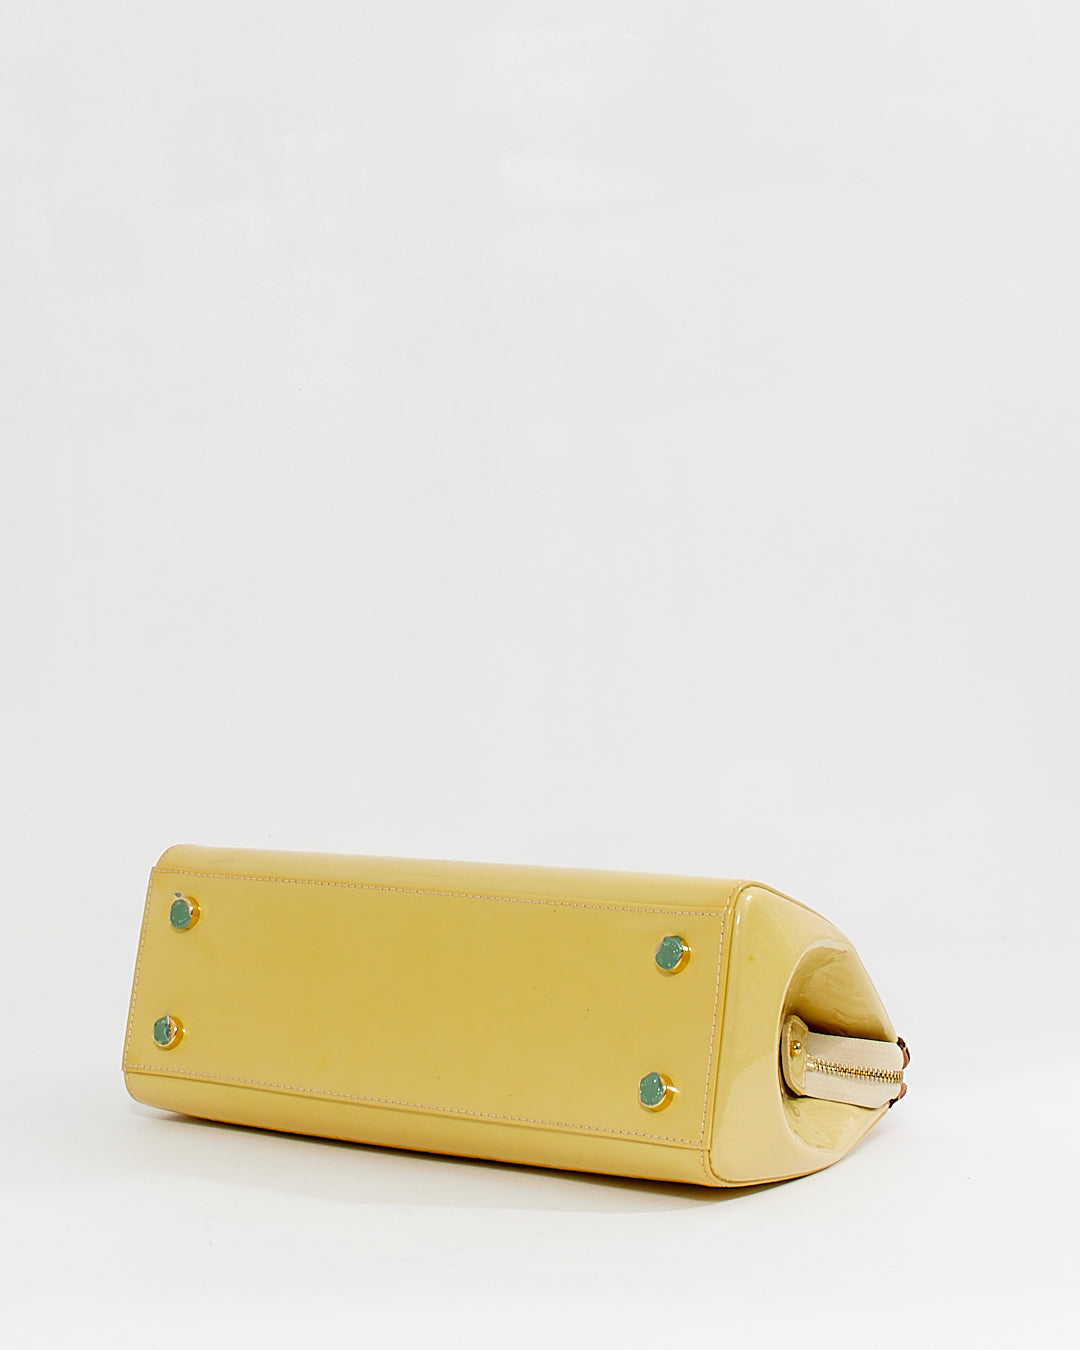 Louis Vuitton Light Yellow Patent Leather Brea GM Bag